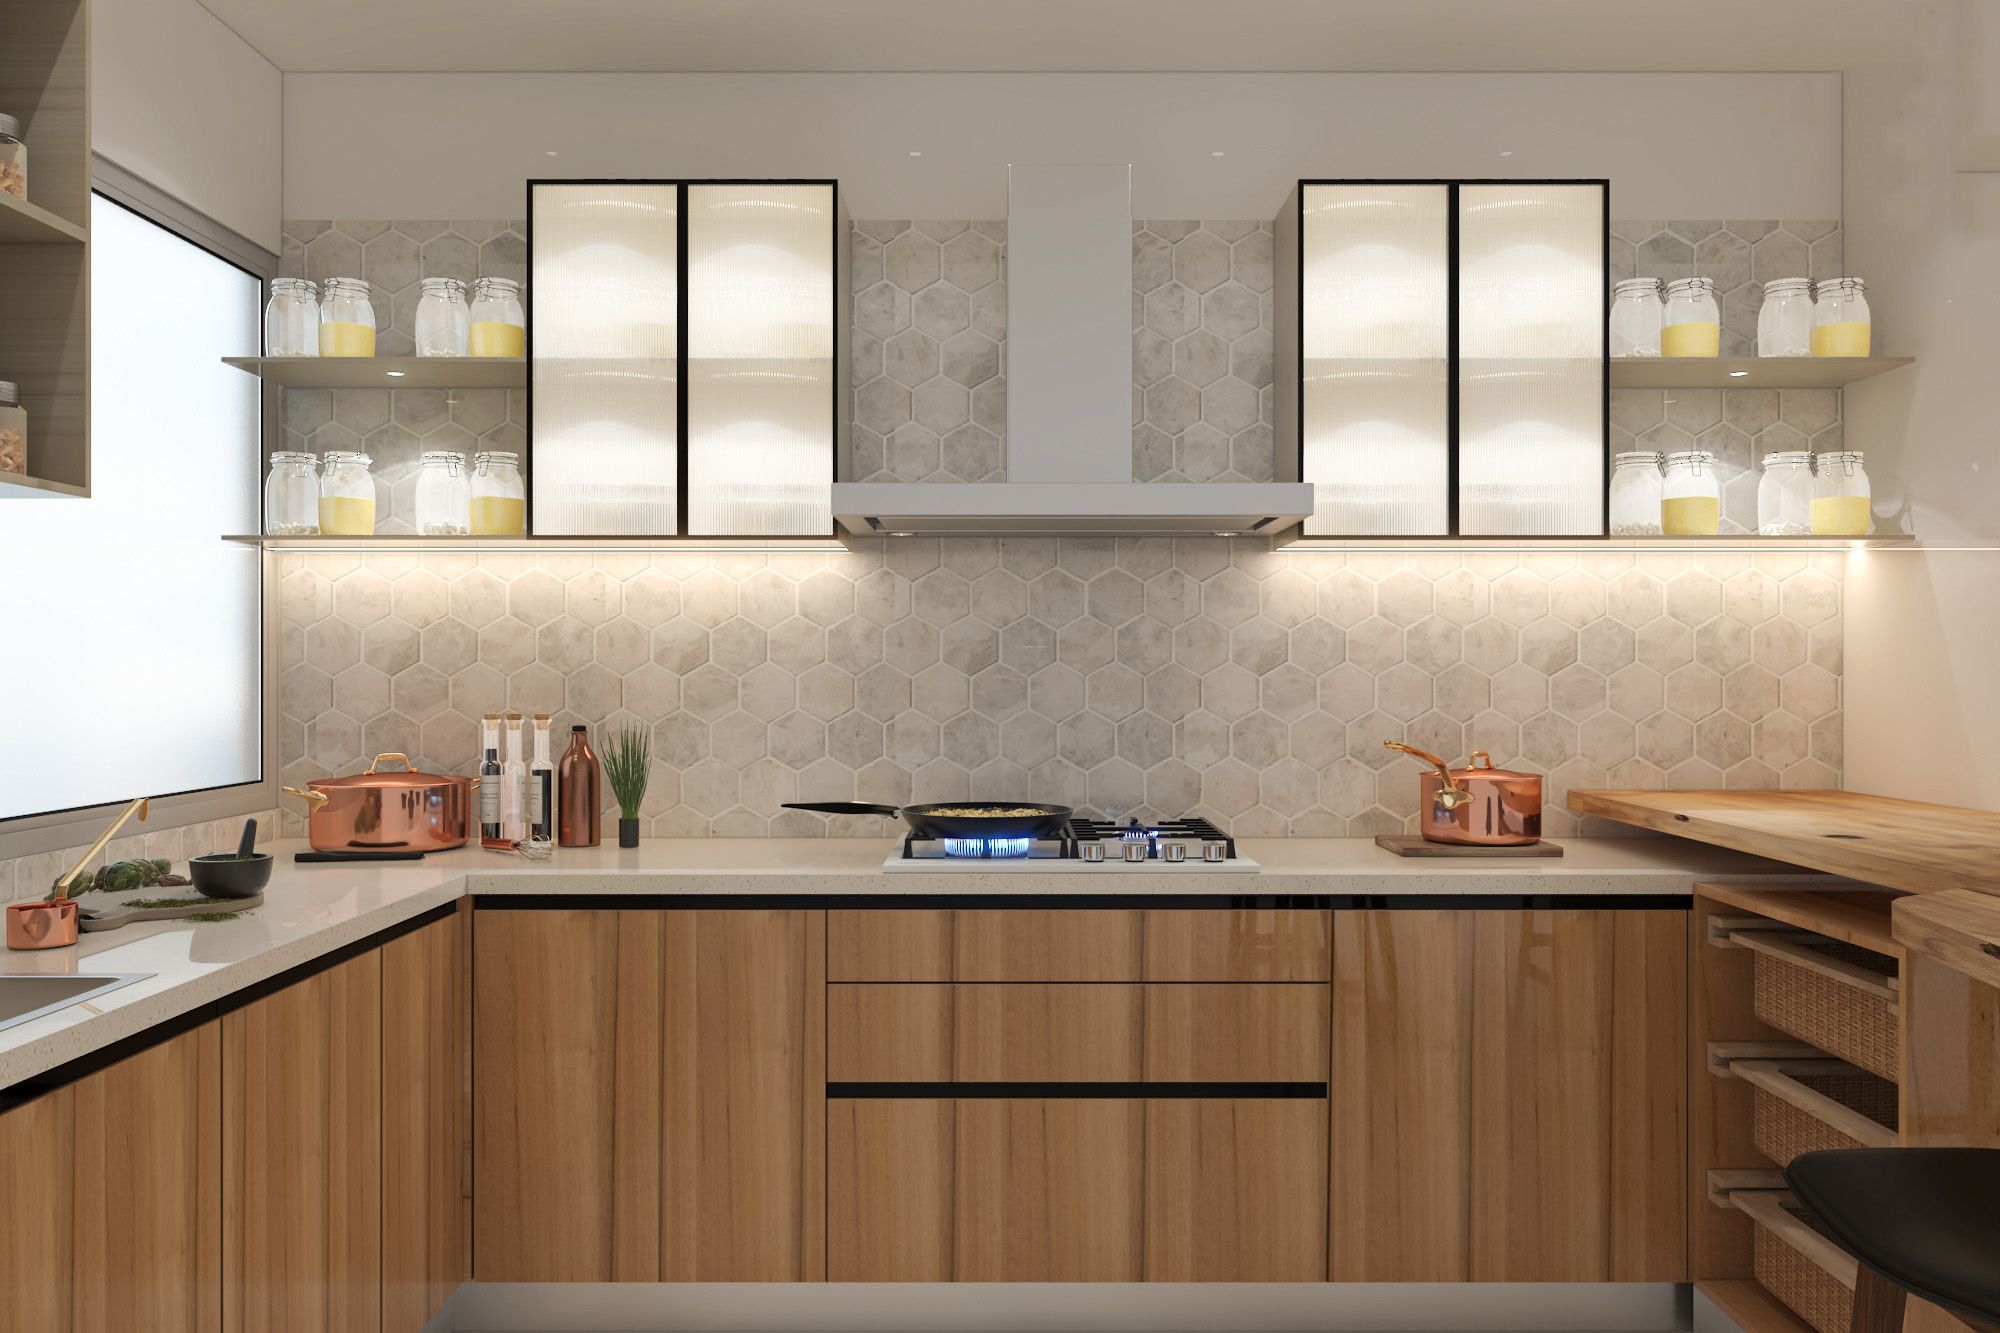 Classic Wooden U-Shaped Modular Kitchen Design With Grey Hexagonal Backsplash